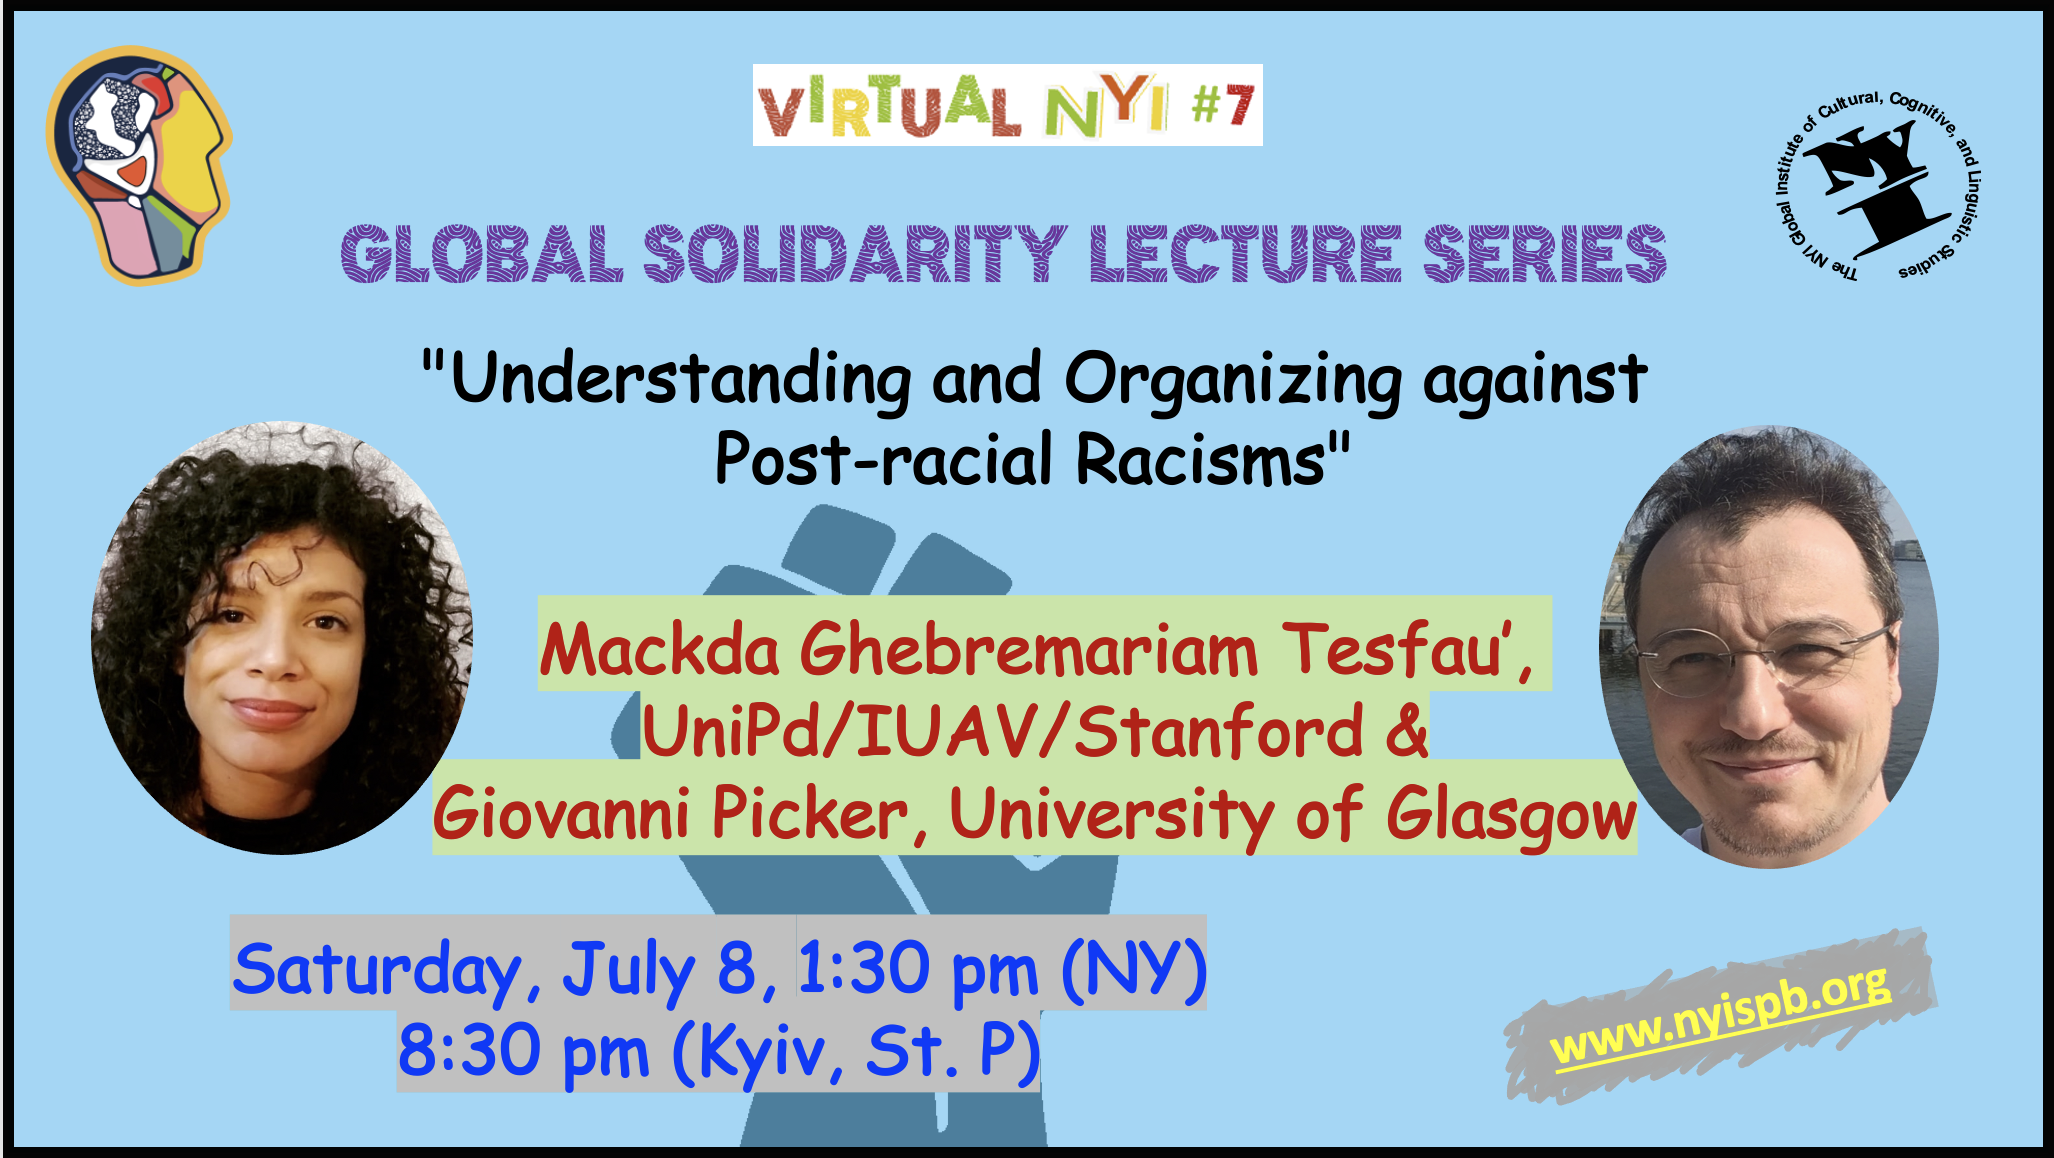 Giovanni Picker (University of Glasgow) & Mackda Ghebremariam Tesfau’ (UniPd/IUAV/Stanford)